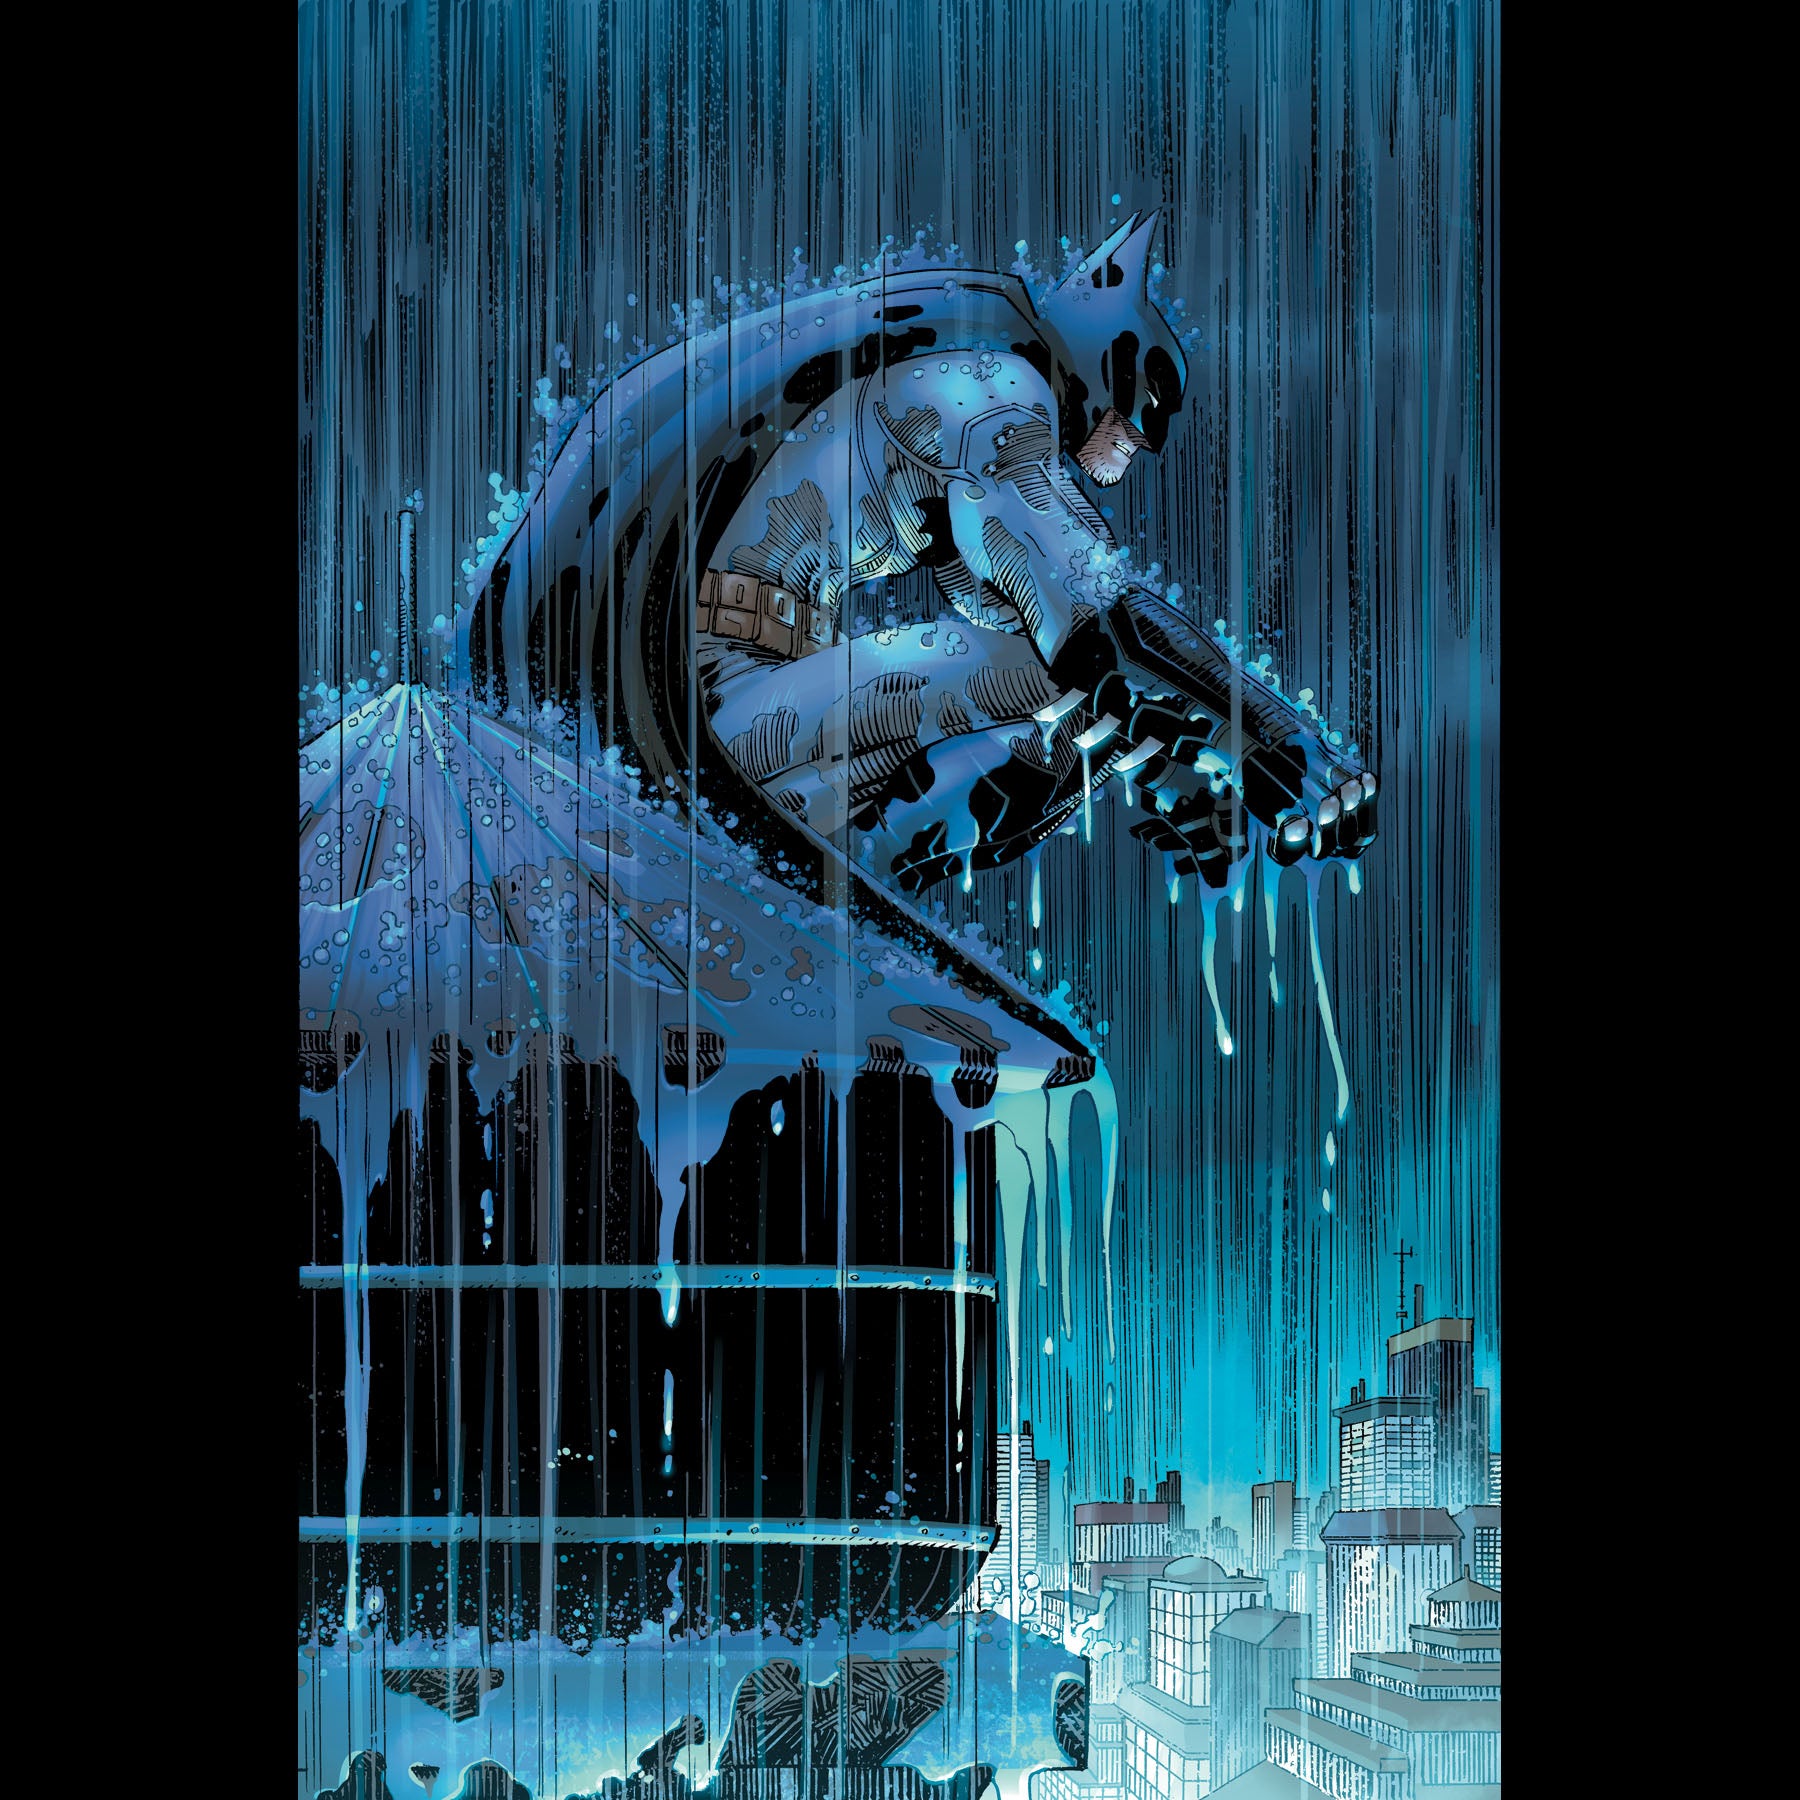 Batman sitting in the rain.